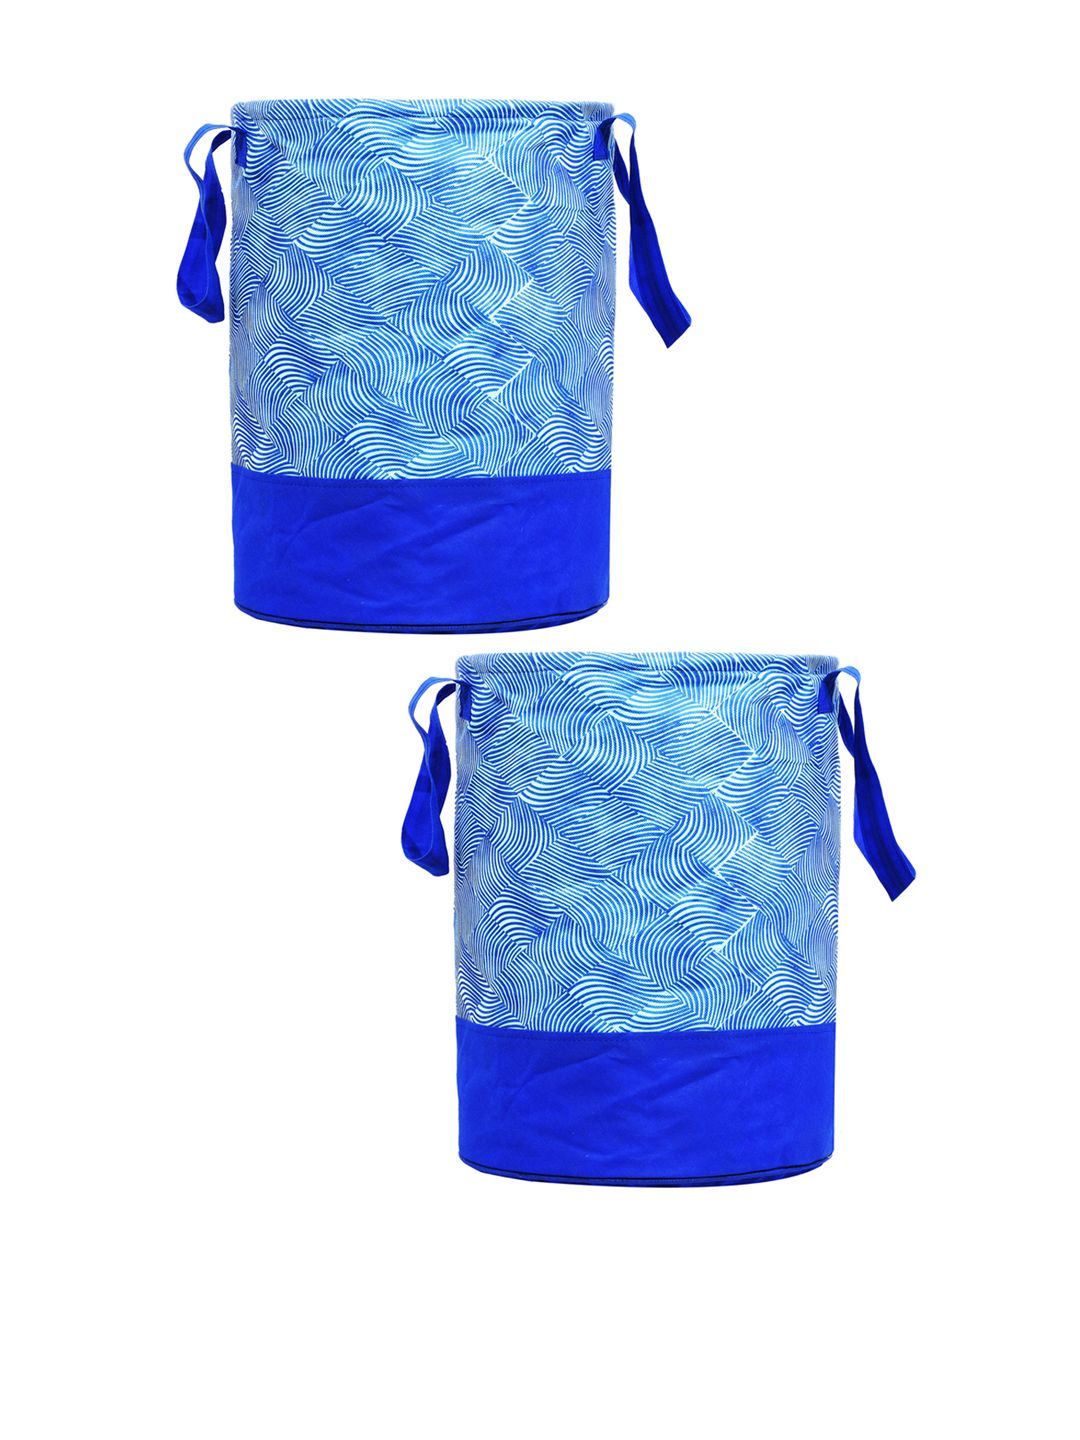 Kuber Industries Set Of 2 Blue & White Printed Waterproof Laundry Bags Price in India